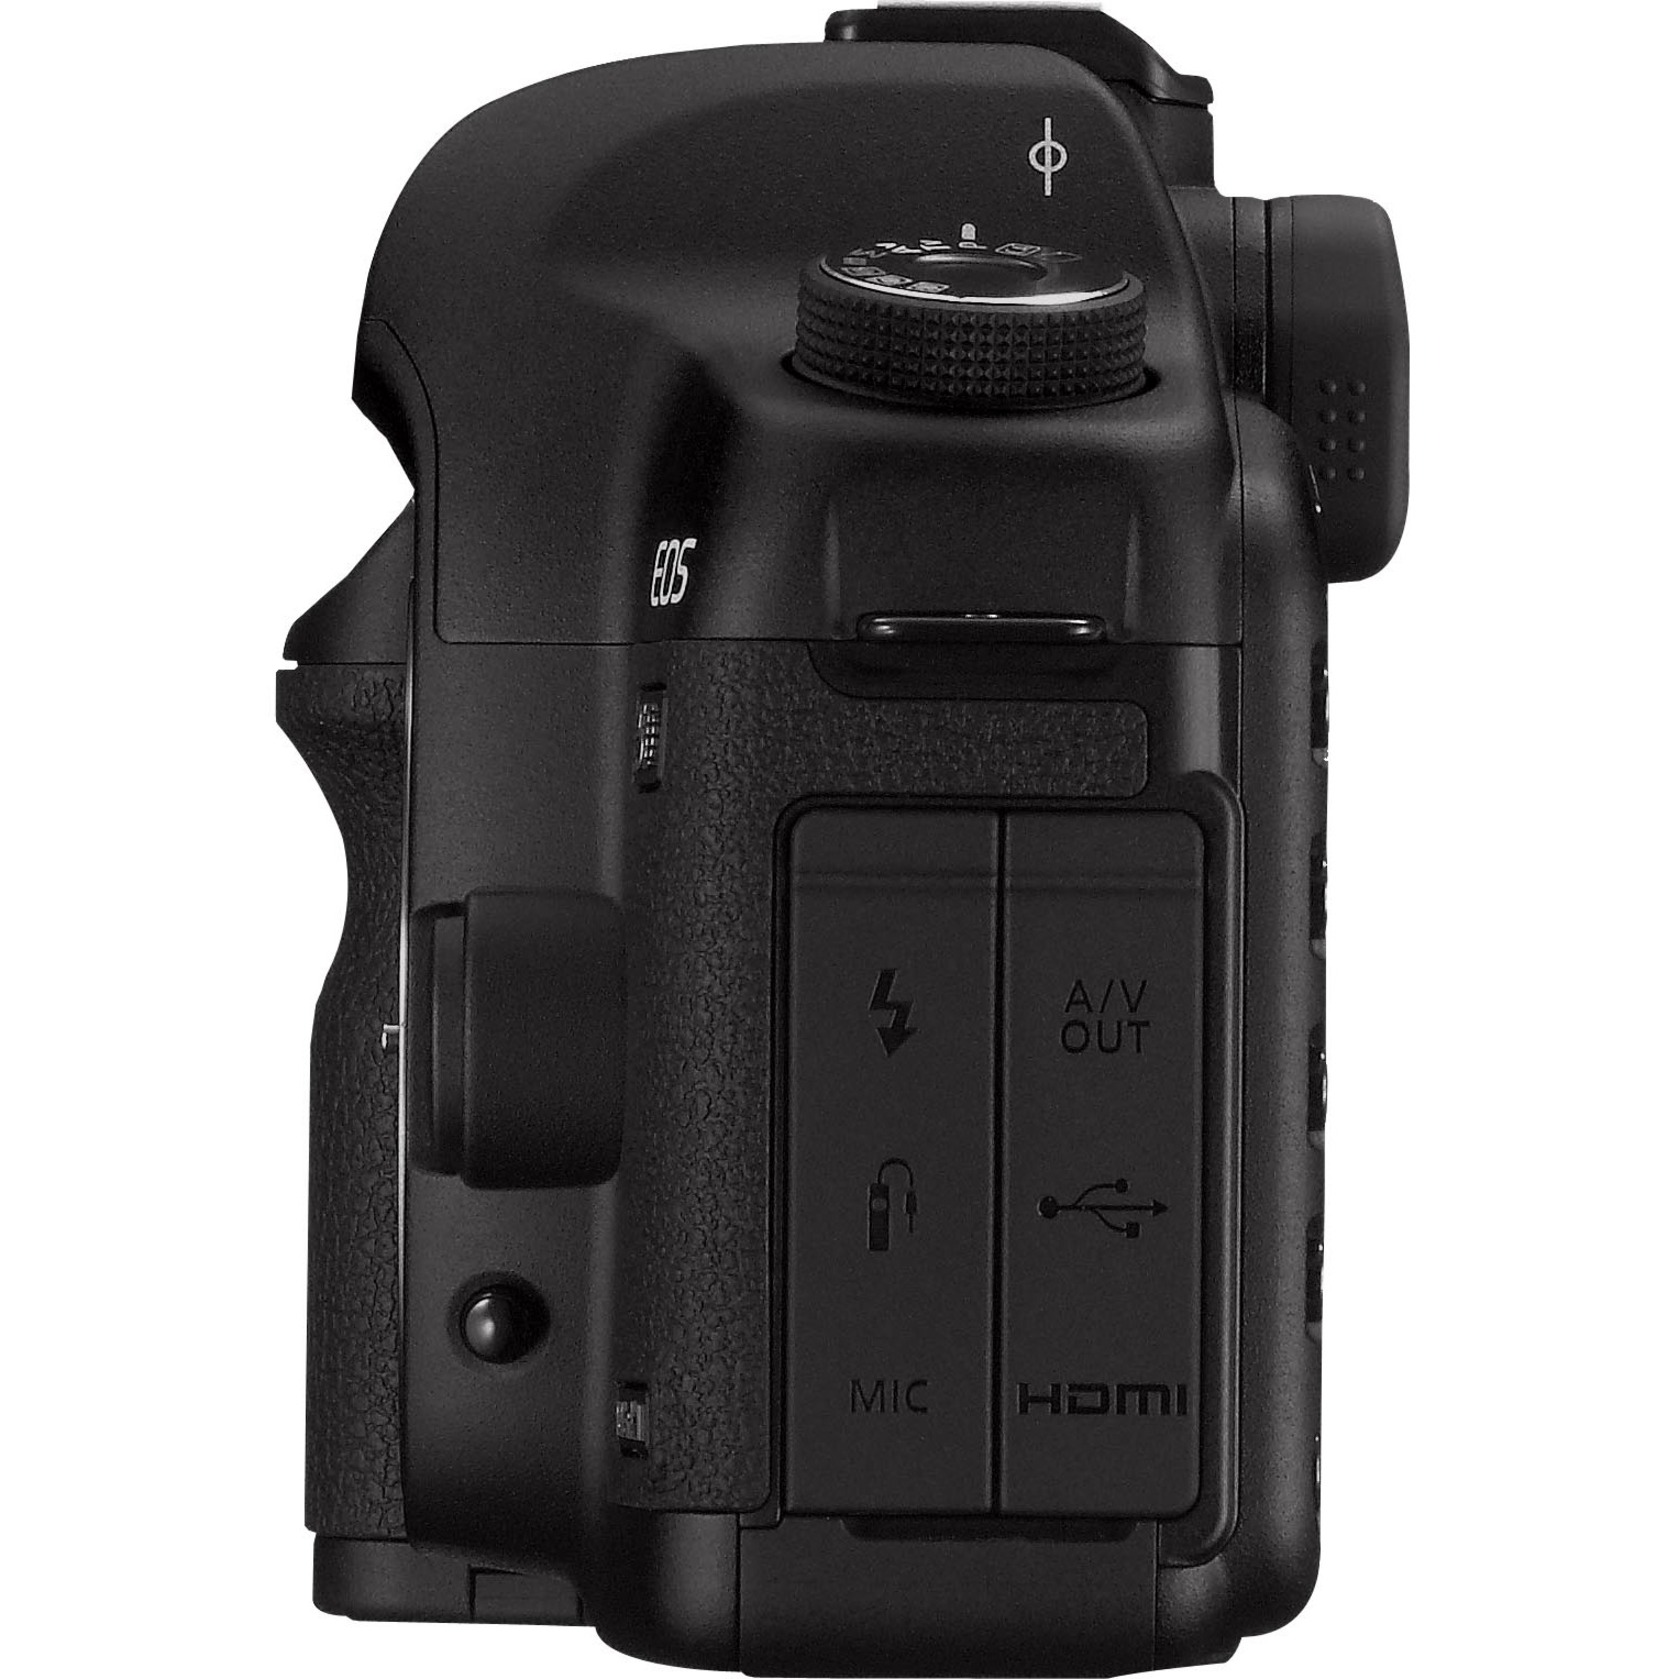 Canon EOS 5D Mark II 21.1 Megapixel Digital SLR Camera Body Only - image 2 of 7